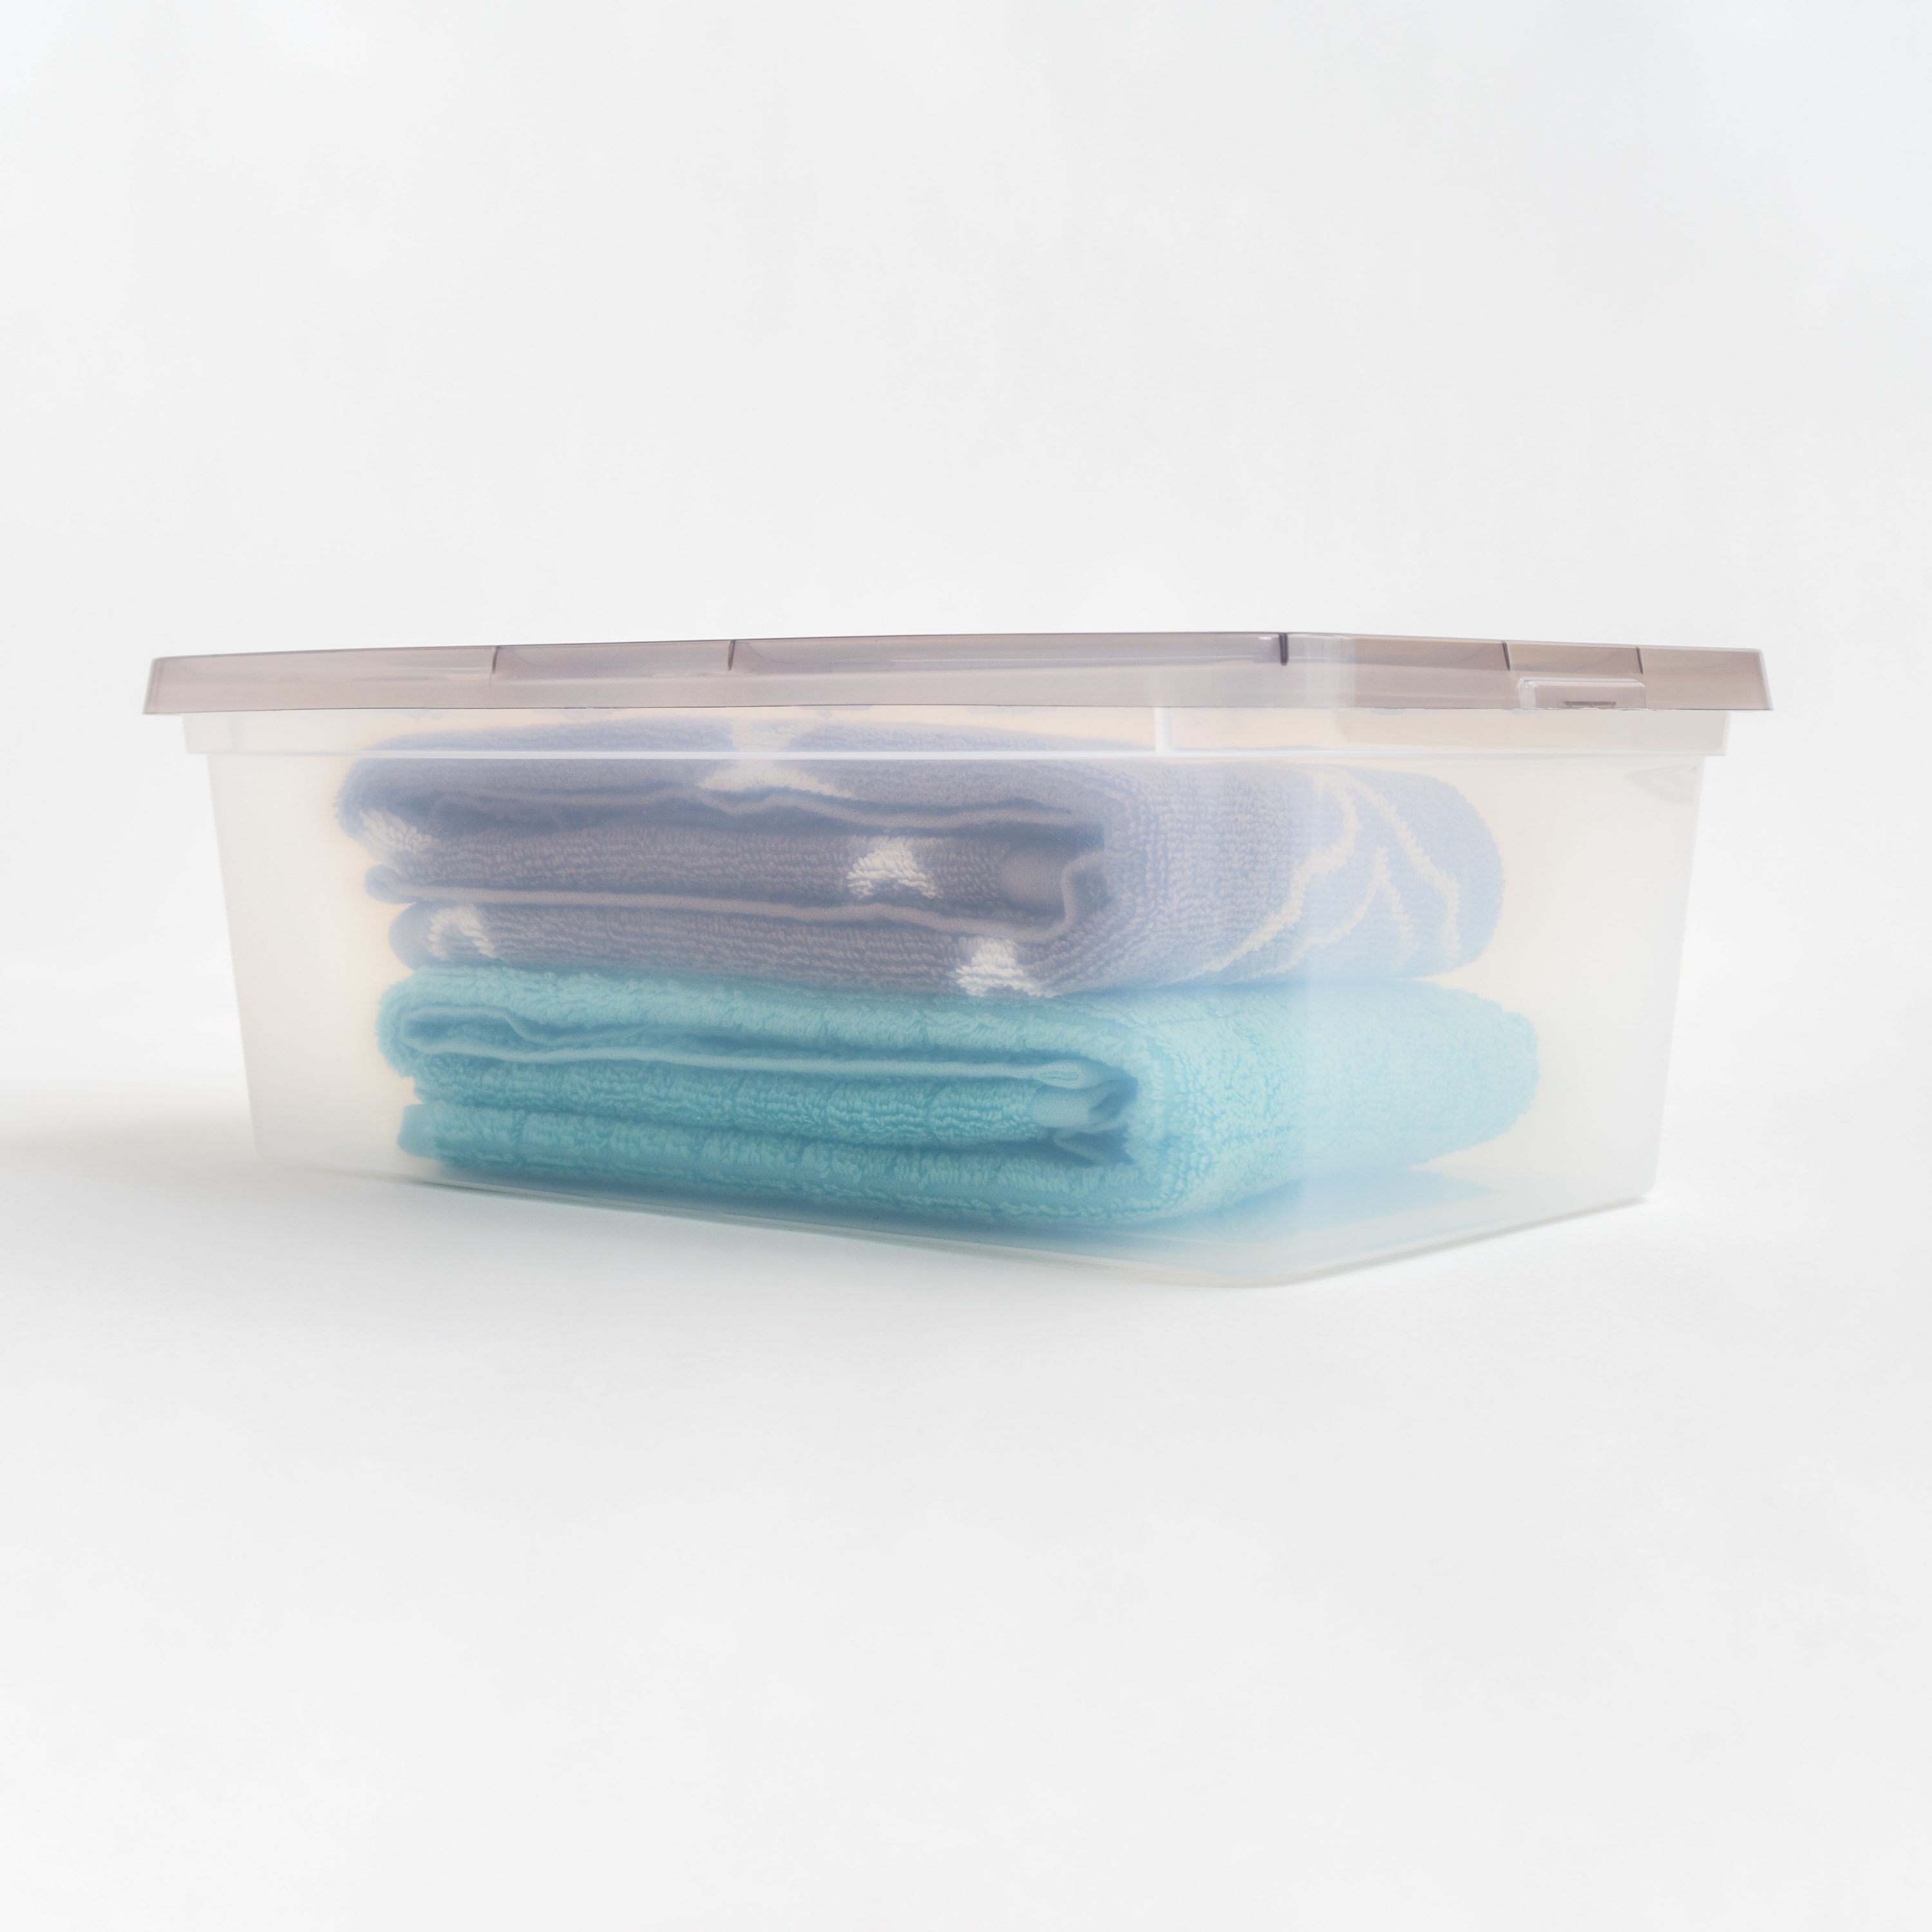 Iris 7 gal. Snap Top Plastic Storage Box in Clear wih Gray Lid 6 Pack